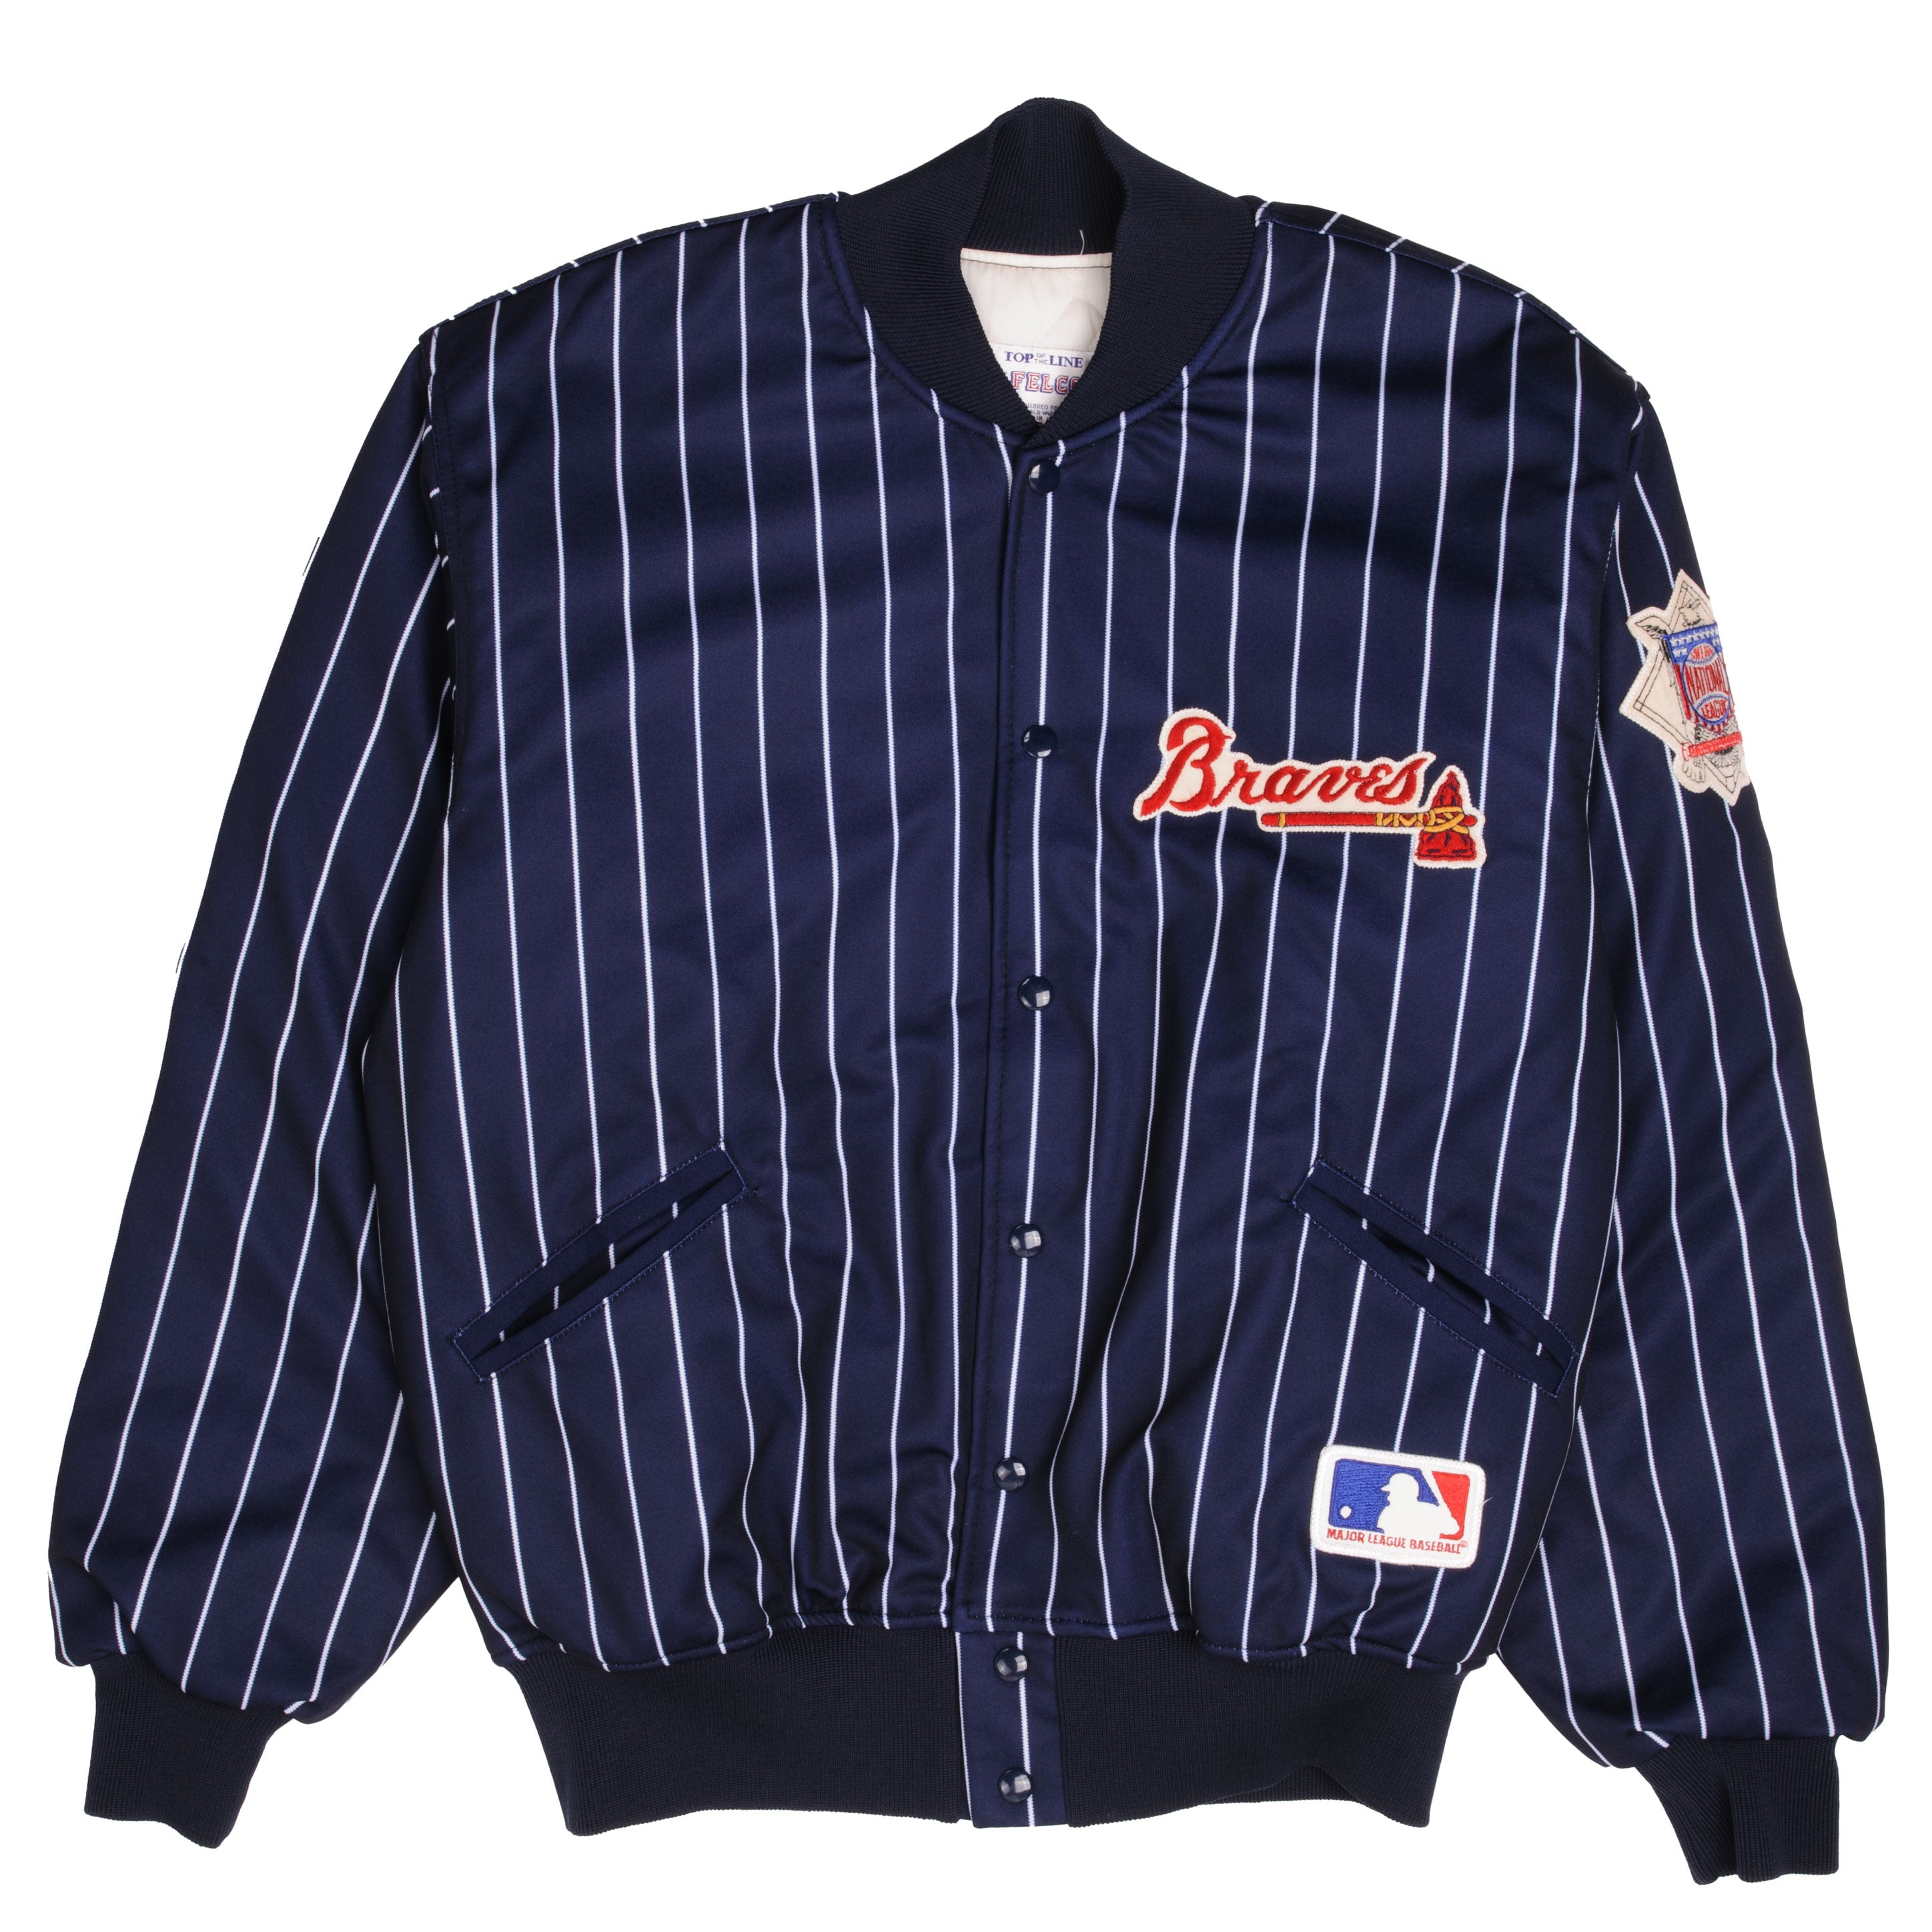 Atlanta Braves Vintage Jacket